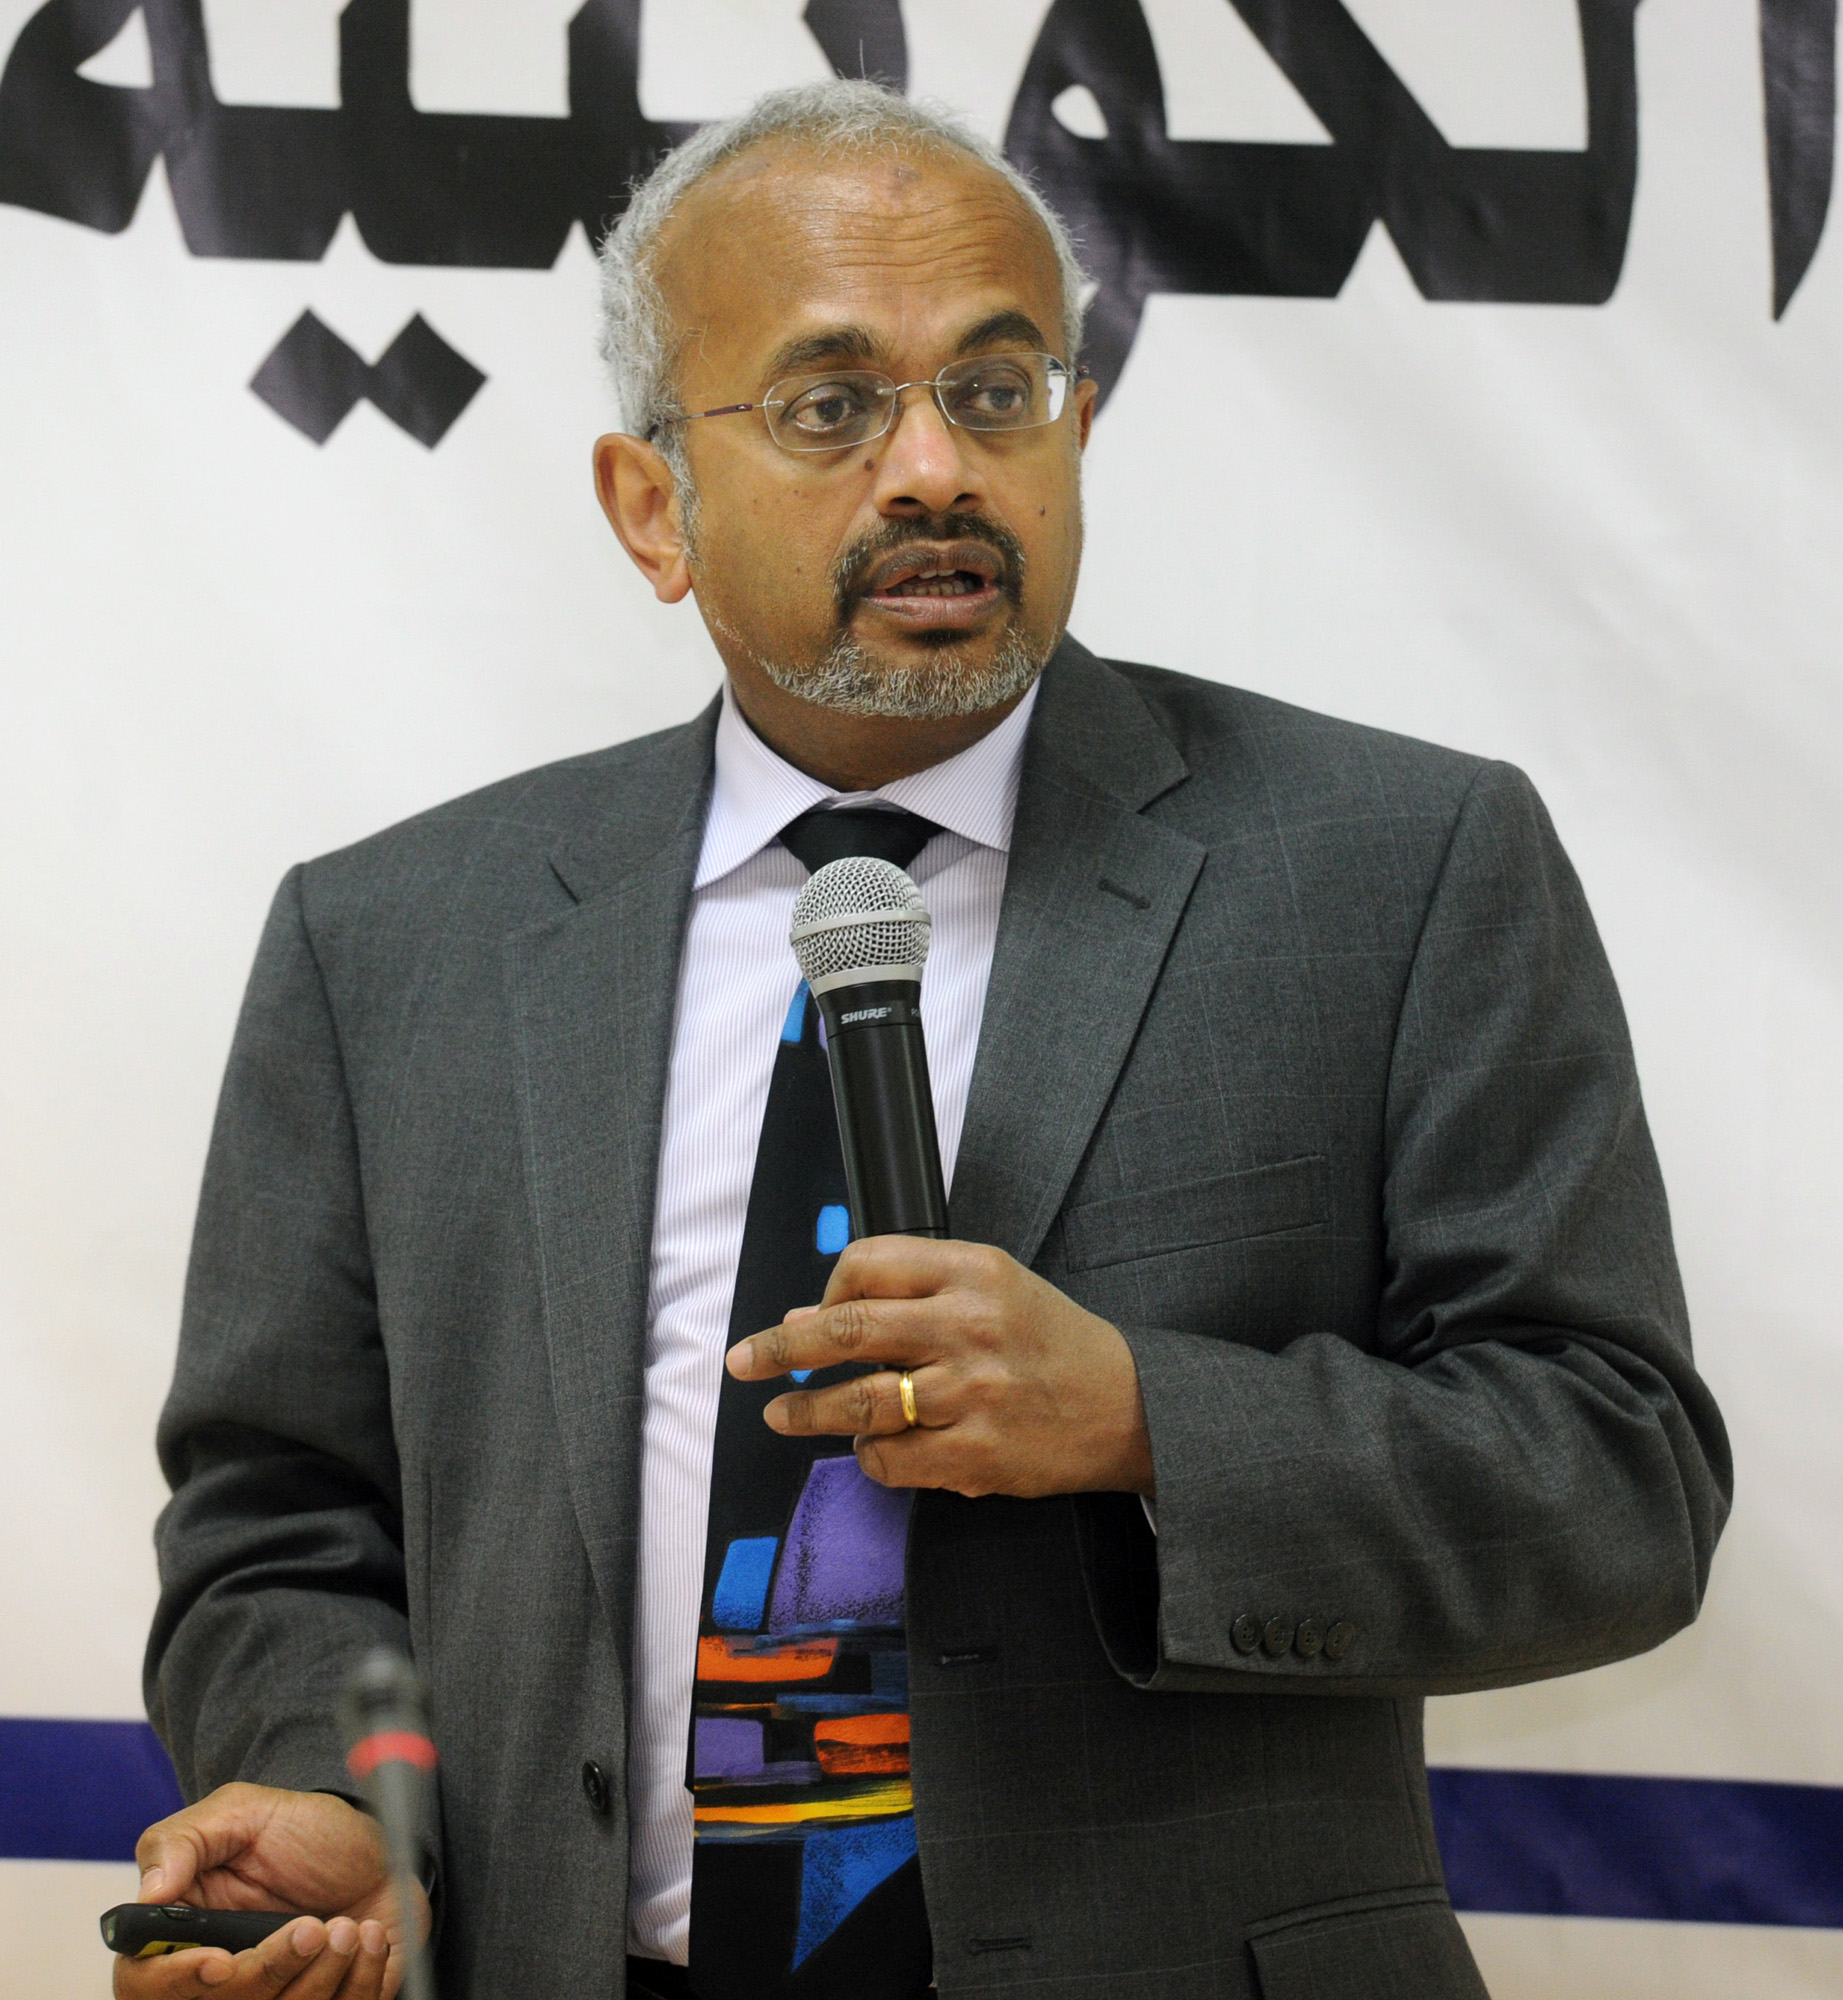 Shantayanan Devarajan, World Bank's Middle East and North Africa Region's chief economist